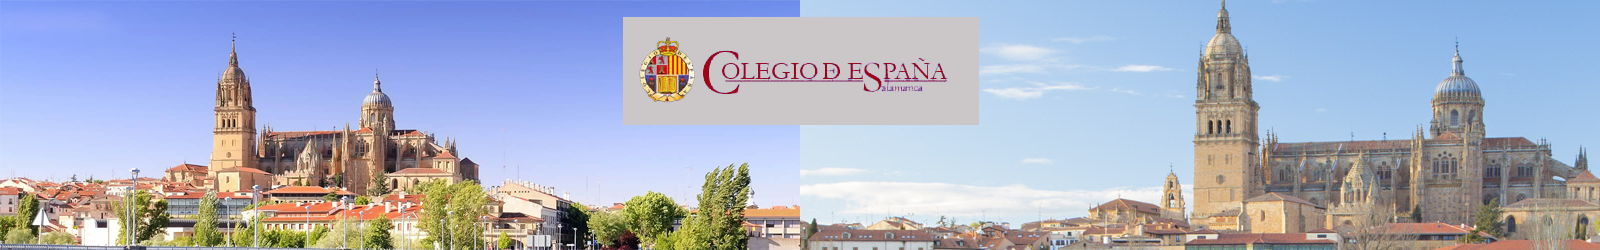 Clegio De Espana